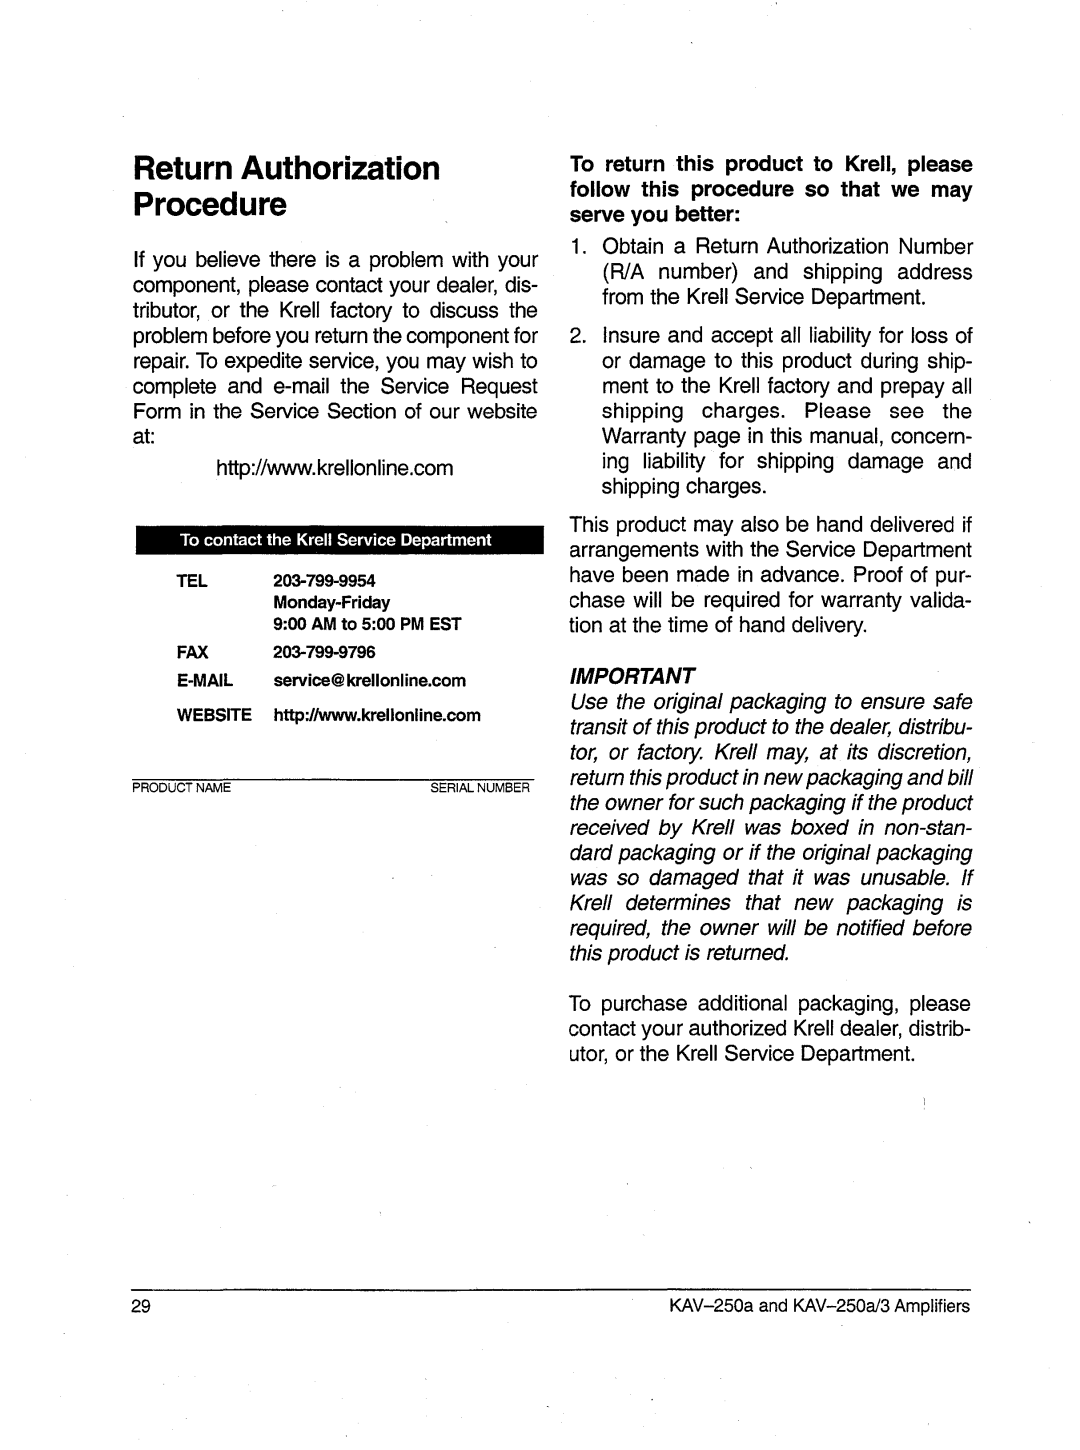 Krell Industries KAV-250a/3 manual ReturnAuthorization Procedure 